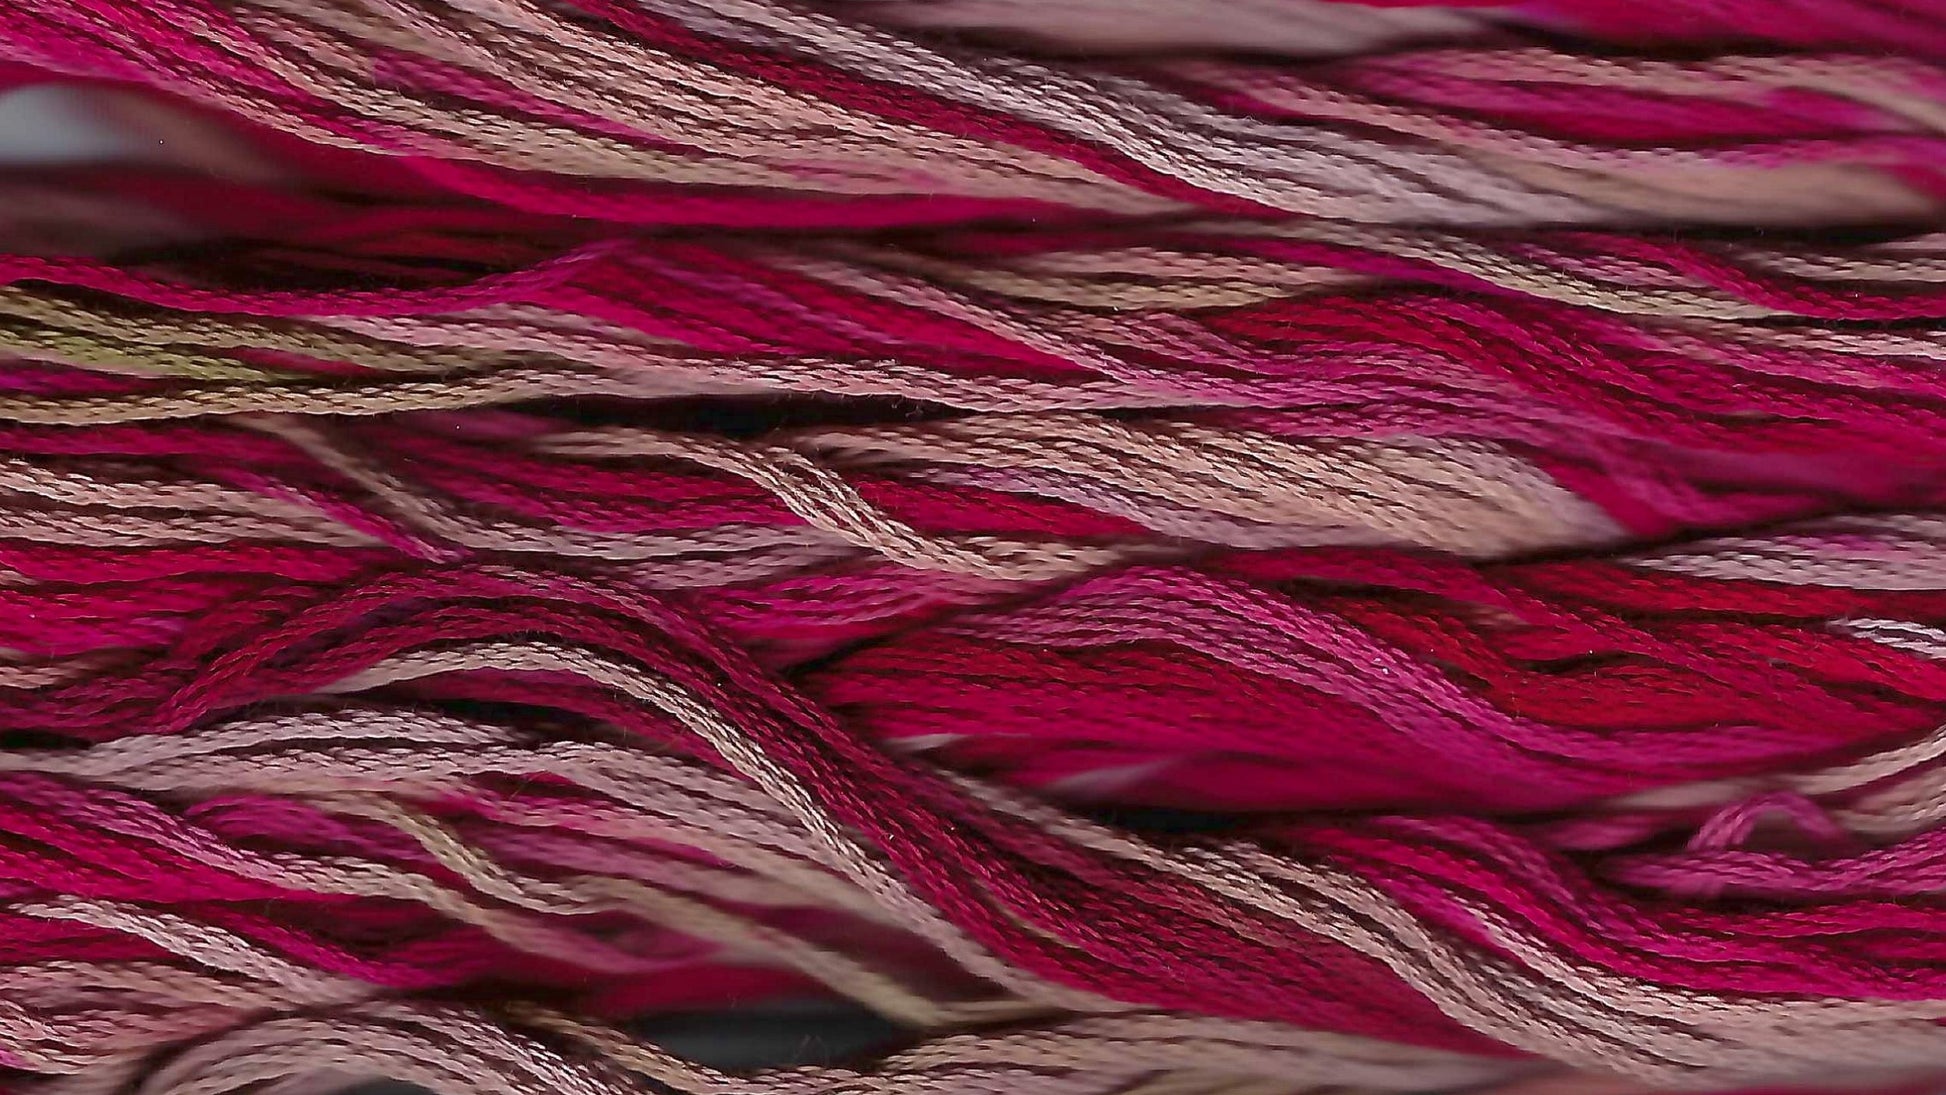 Limited Edition Red - Gentle Arts Cotton Thread - 5 yard Skein - Cross Stitch Floss, Thread & Floss, Thread & Floss, The Crafty Grimalkin - A Cross Stitch Store